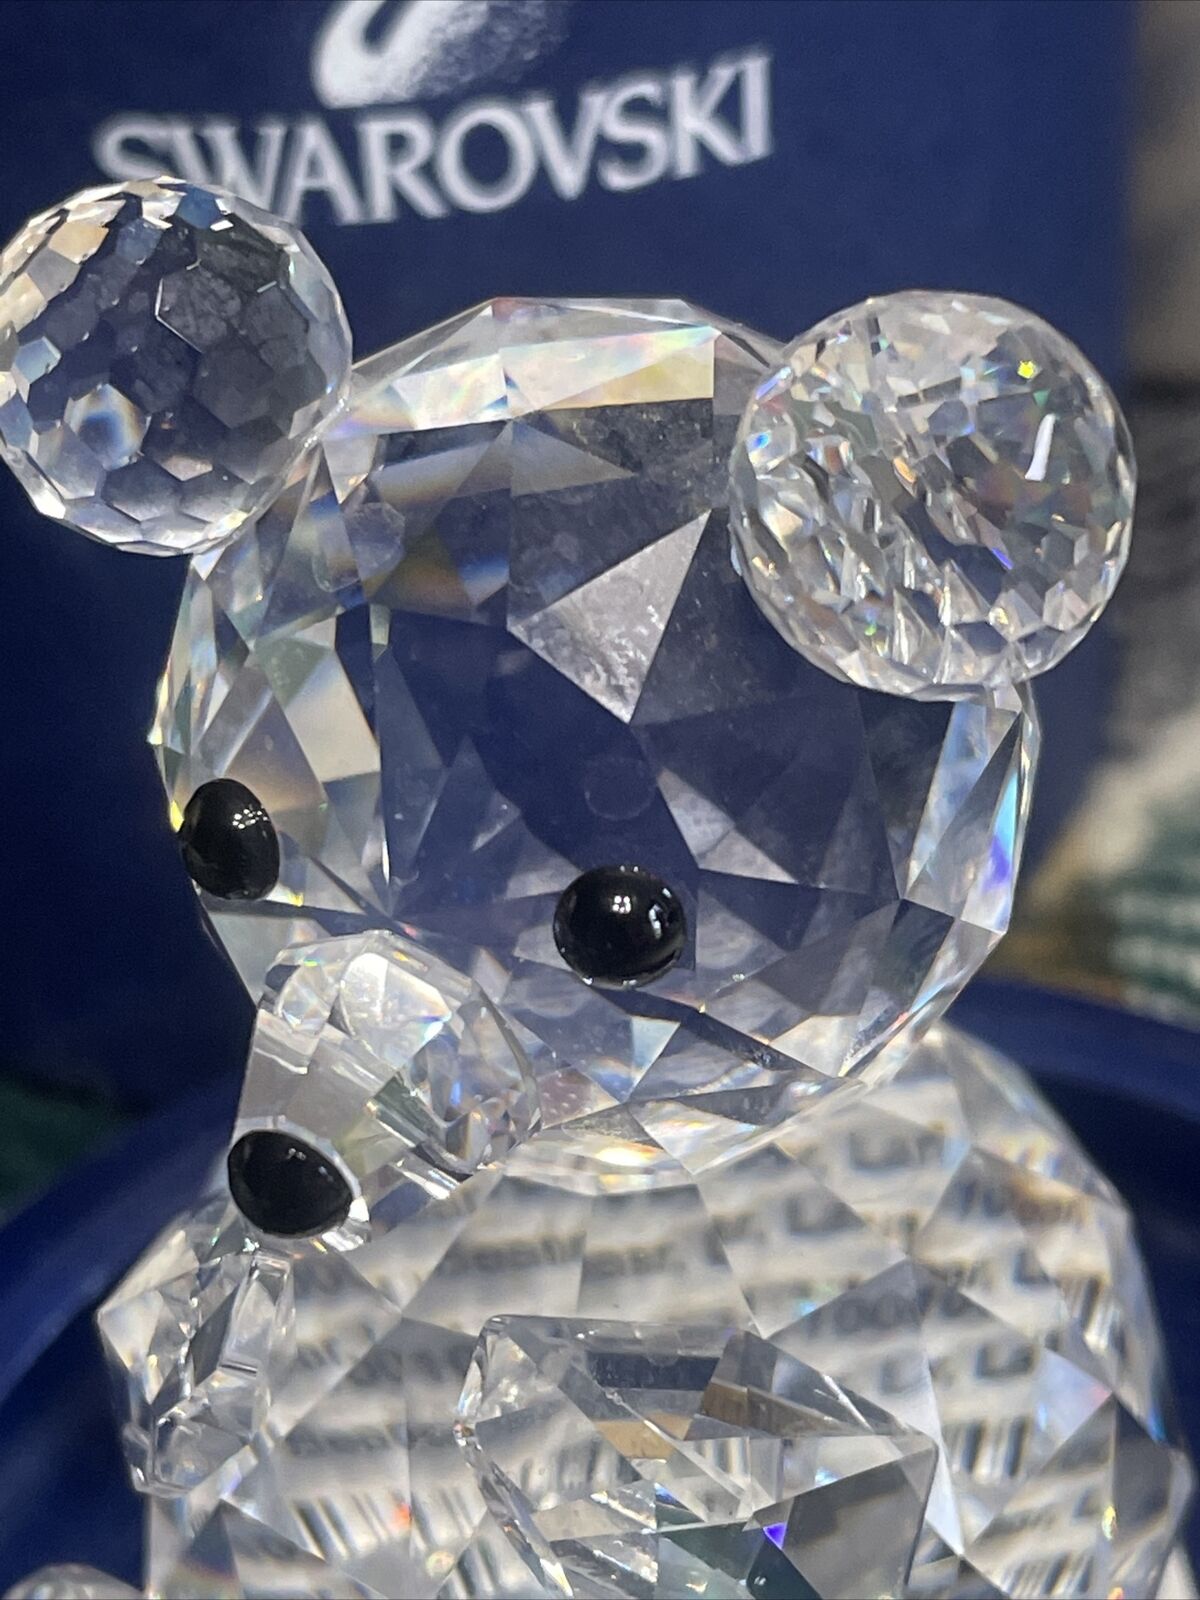 Bear LARGE 2 3/4" TEDDY BEAR Figurine 010009 / 7637 075 000